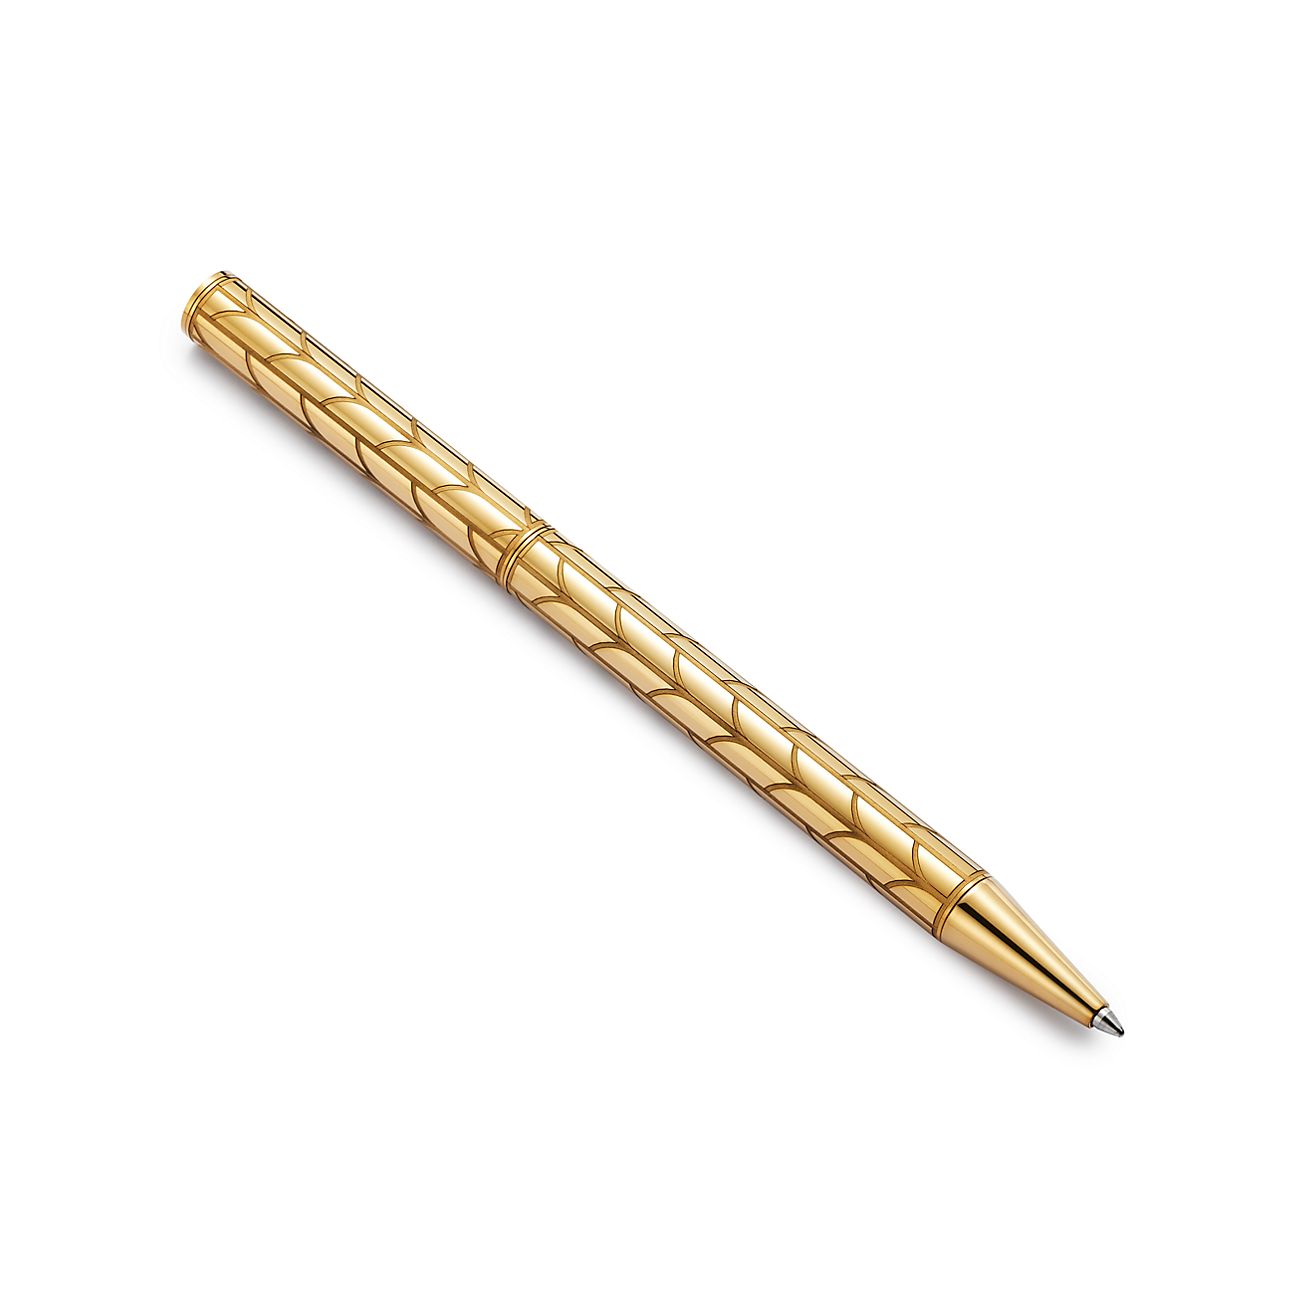 Louis Vuitton Ballpoint Pens